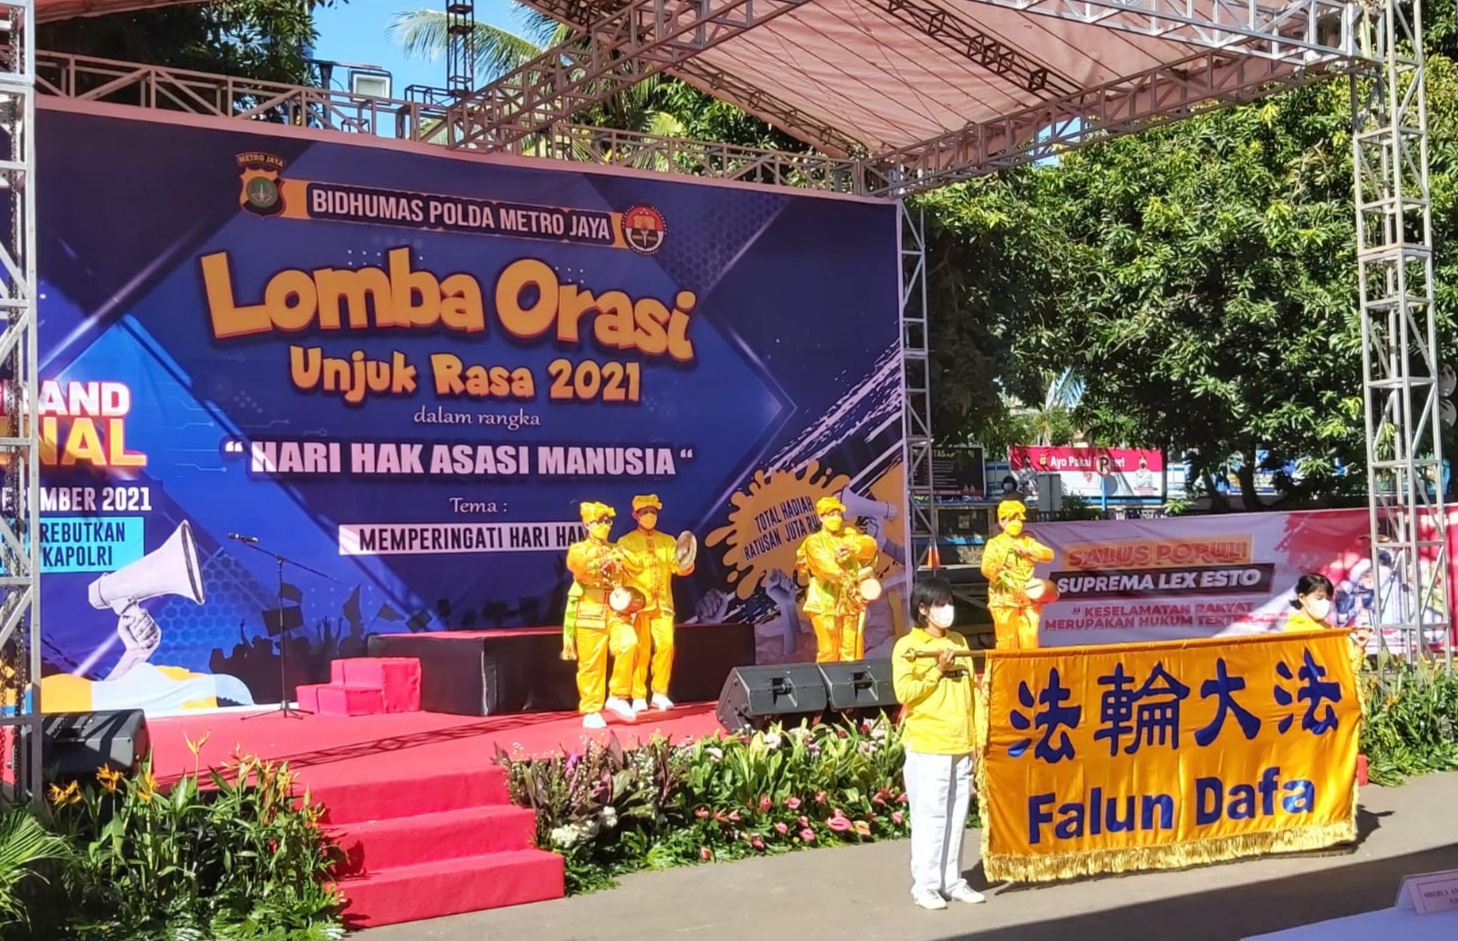 Image for article Jakarta: Menyampaikan Fakta Falun Dafa Saat Peringatan Hari HAM di Polda Metro Jaya